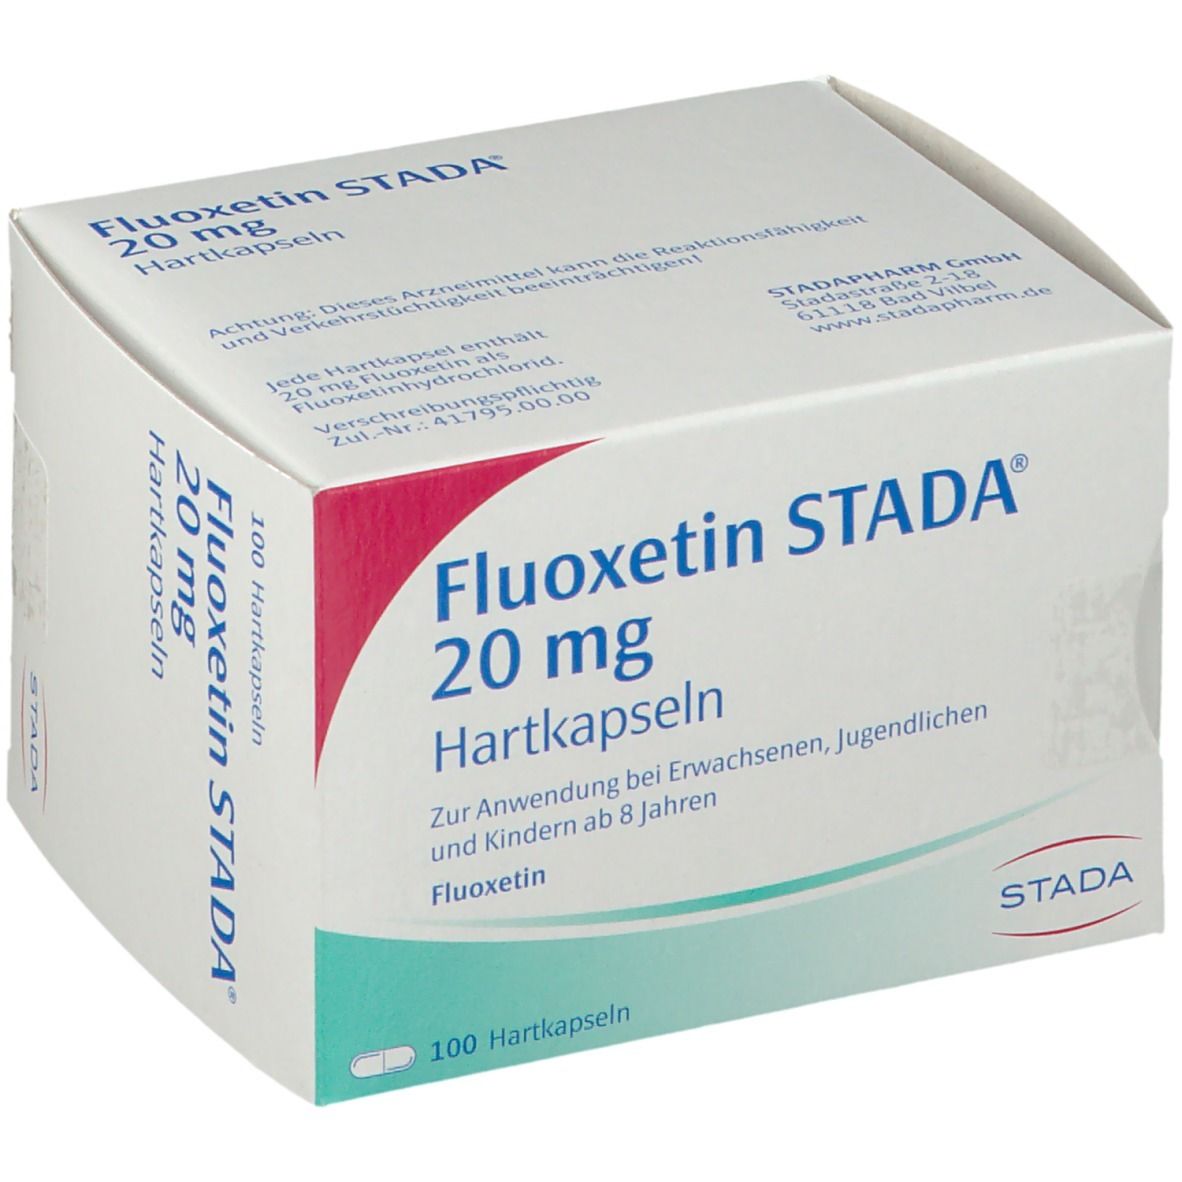 Fluoxetin STADA® 20 mg